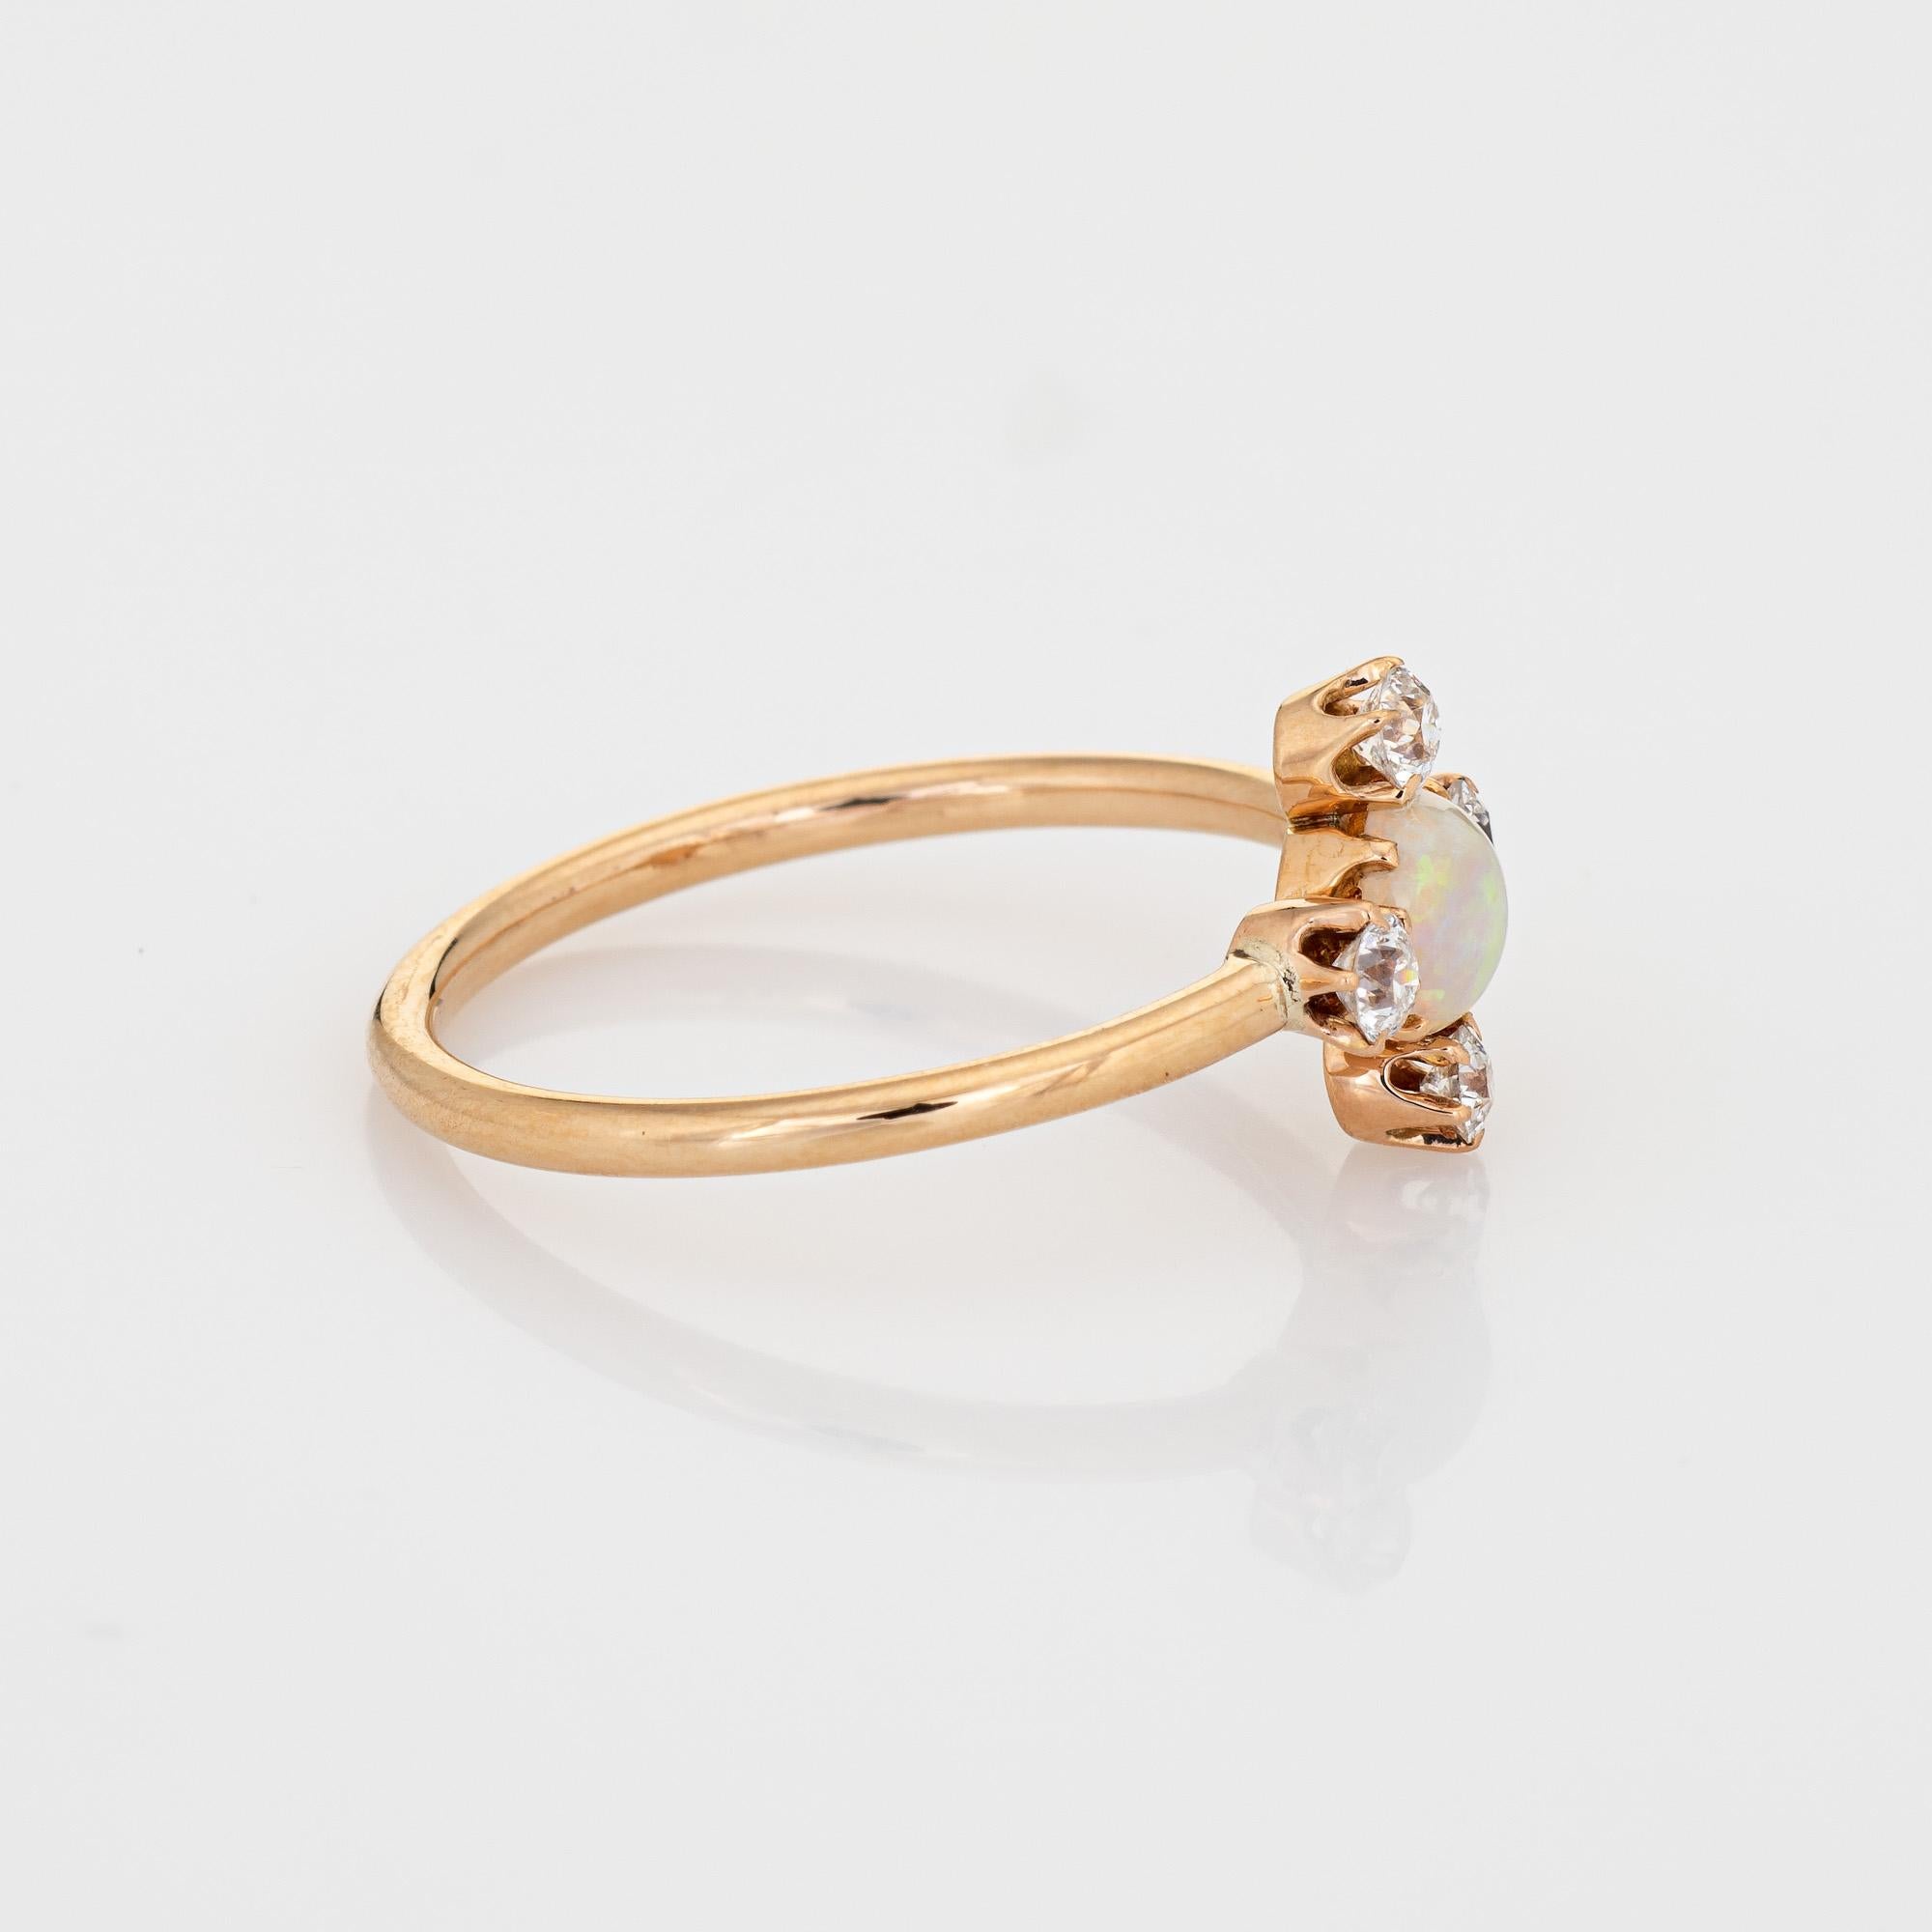 Cabochon Antique Victorian Ring Opal Mine Cut Diamond Conversion Band 14k Yellow Gold